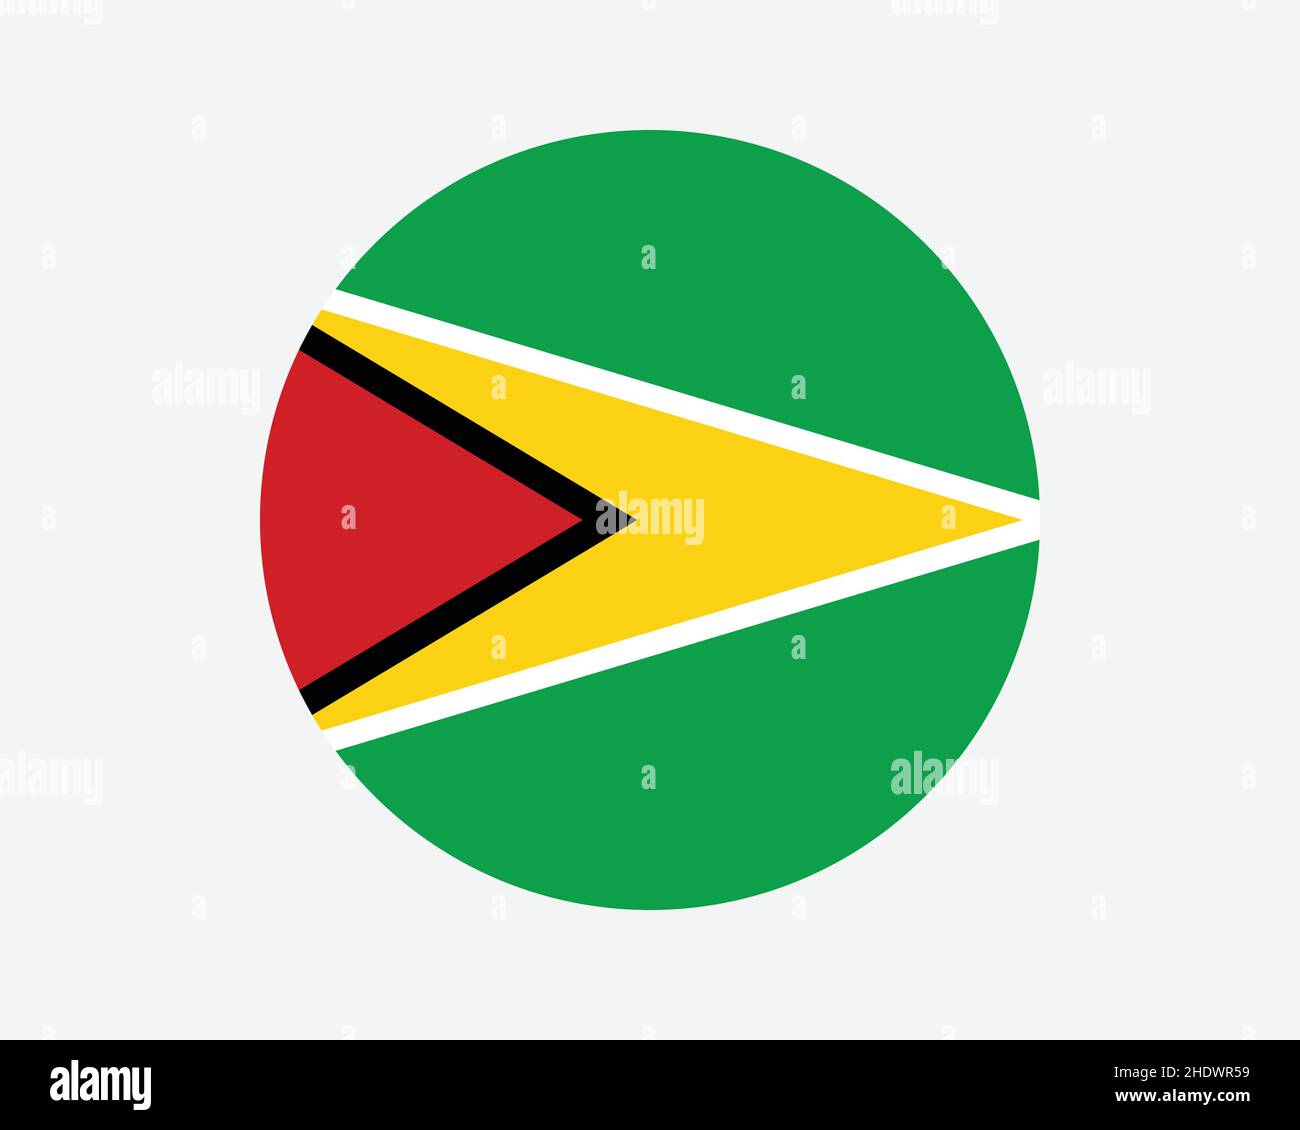 Guyana Runde Land Flagge. Flagge Des Guyanischen Kreises. Kooperative Republik Guyana – Rundschreiben-Knopfbanner. EPS-Vektorgrafik. Stock Vektor